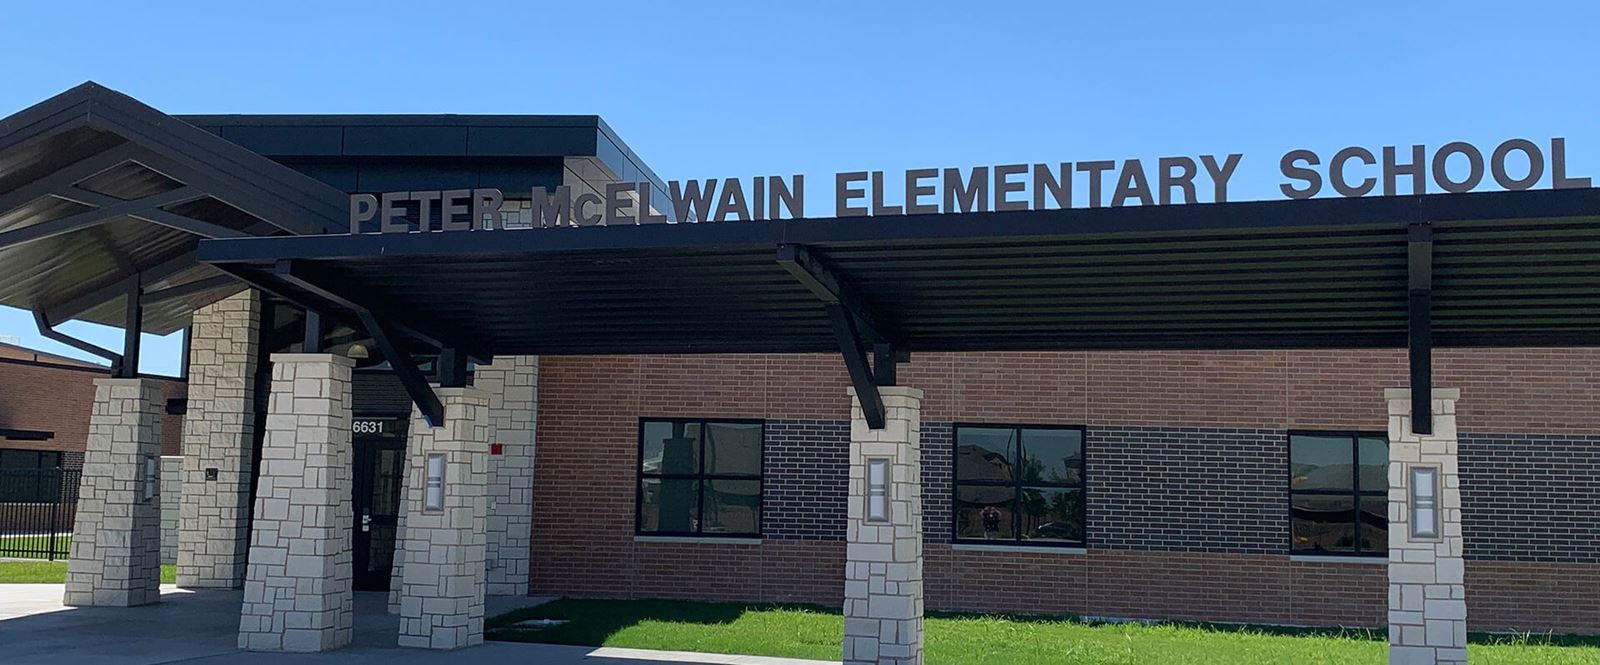 McElwain Elementary School, Katy ISD, in Elyson.